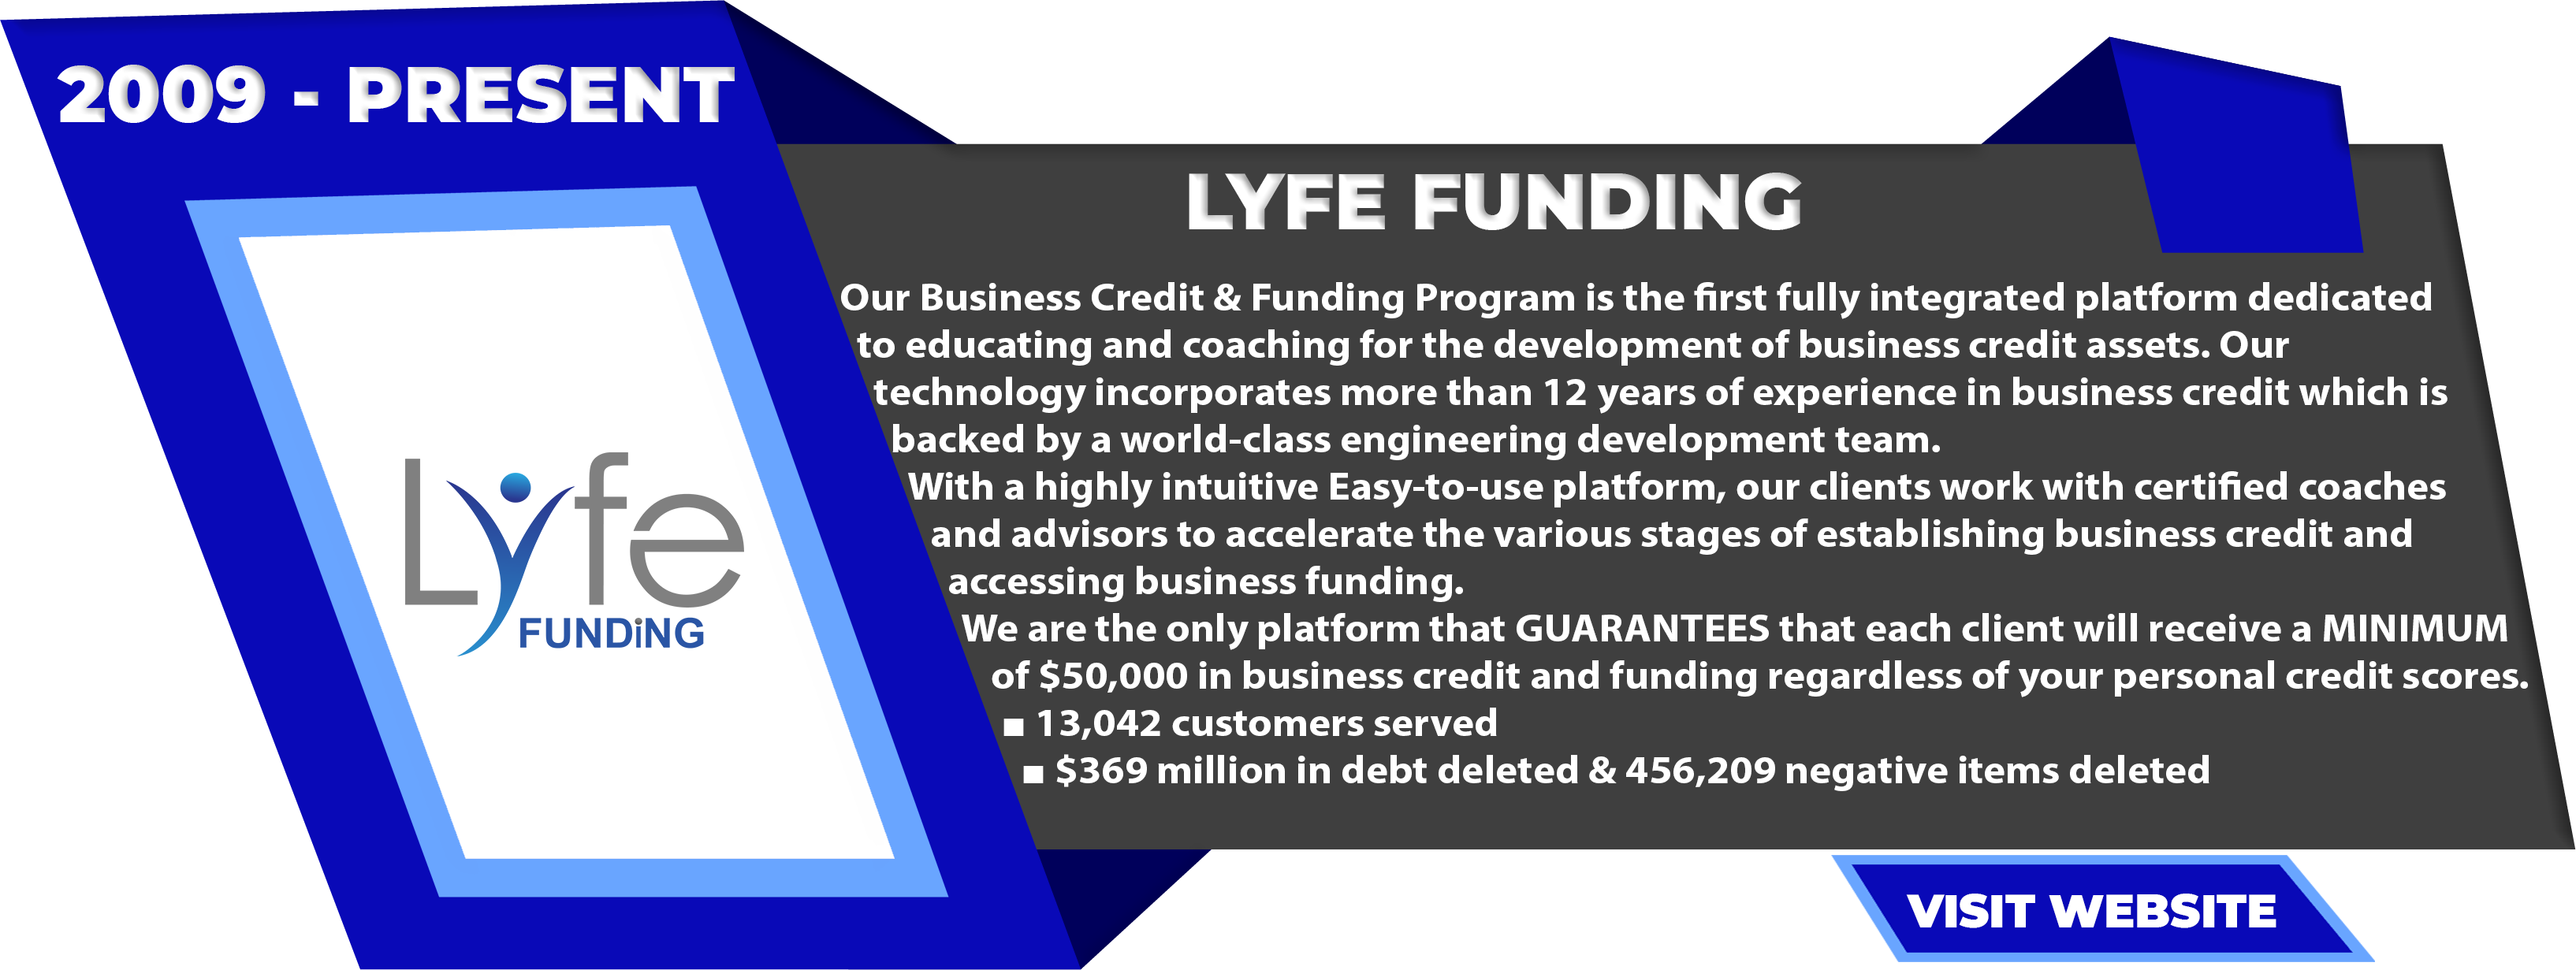 Lyfe-Funding-2009-Present-1